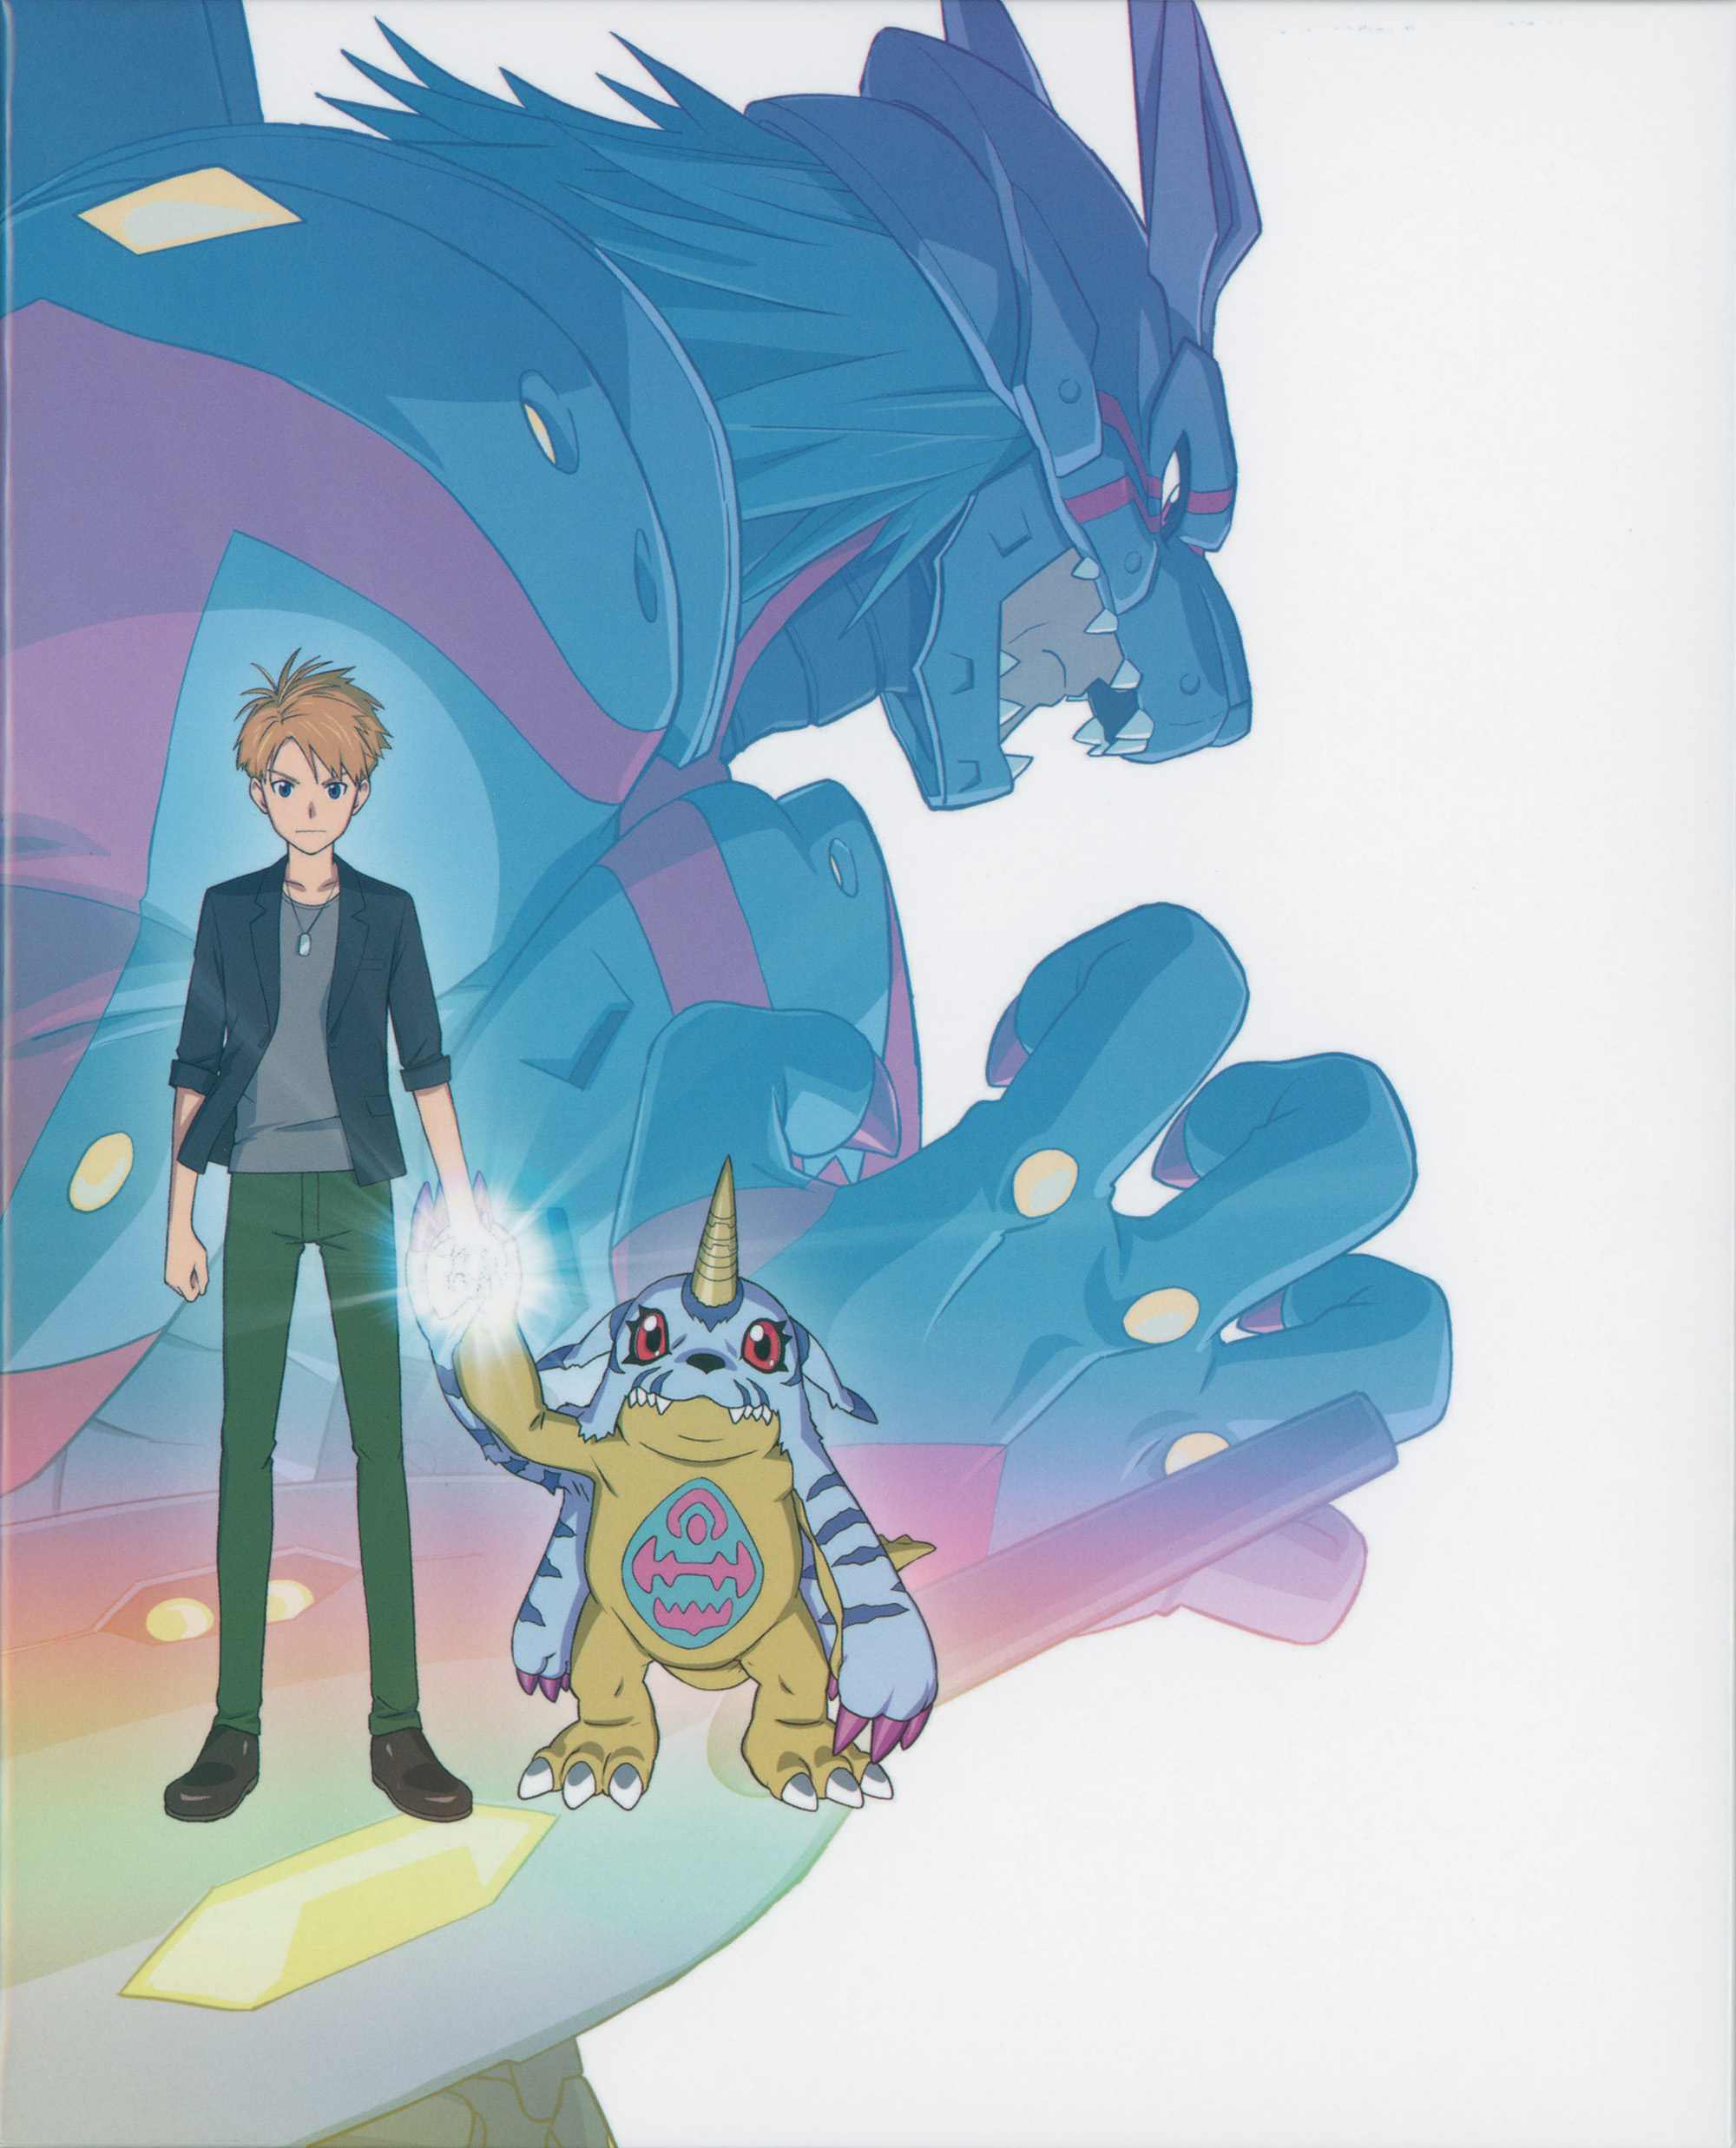 Digimon Adventure: Last Evolution Kizuna' Arrives on Digital September 29